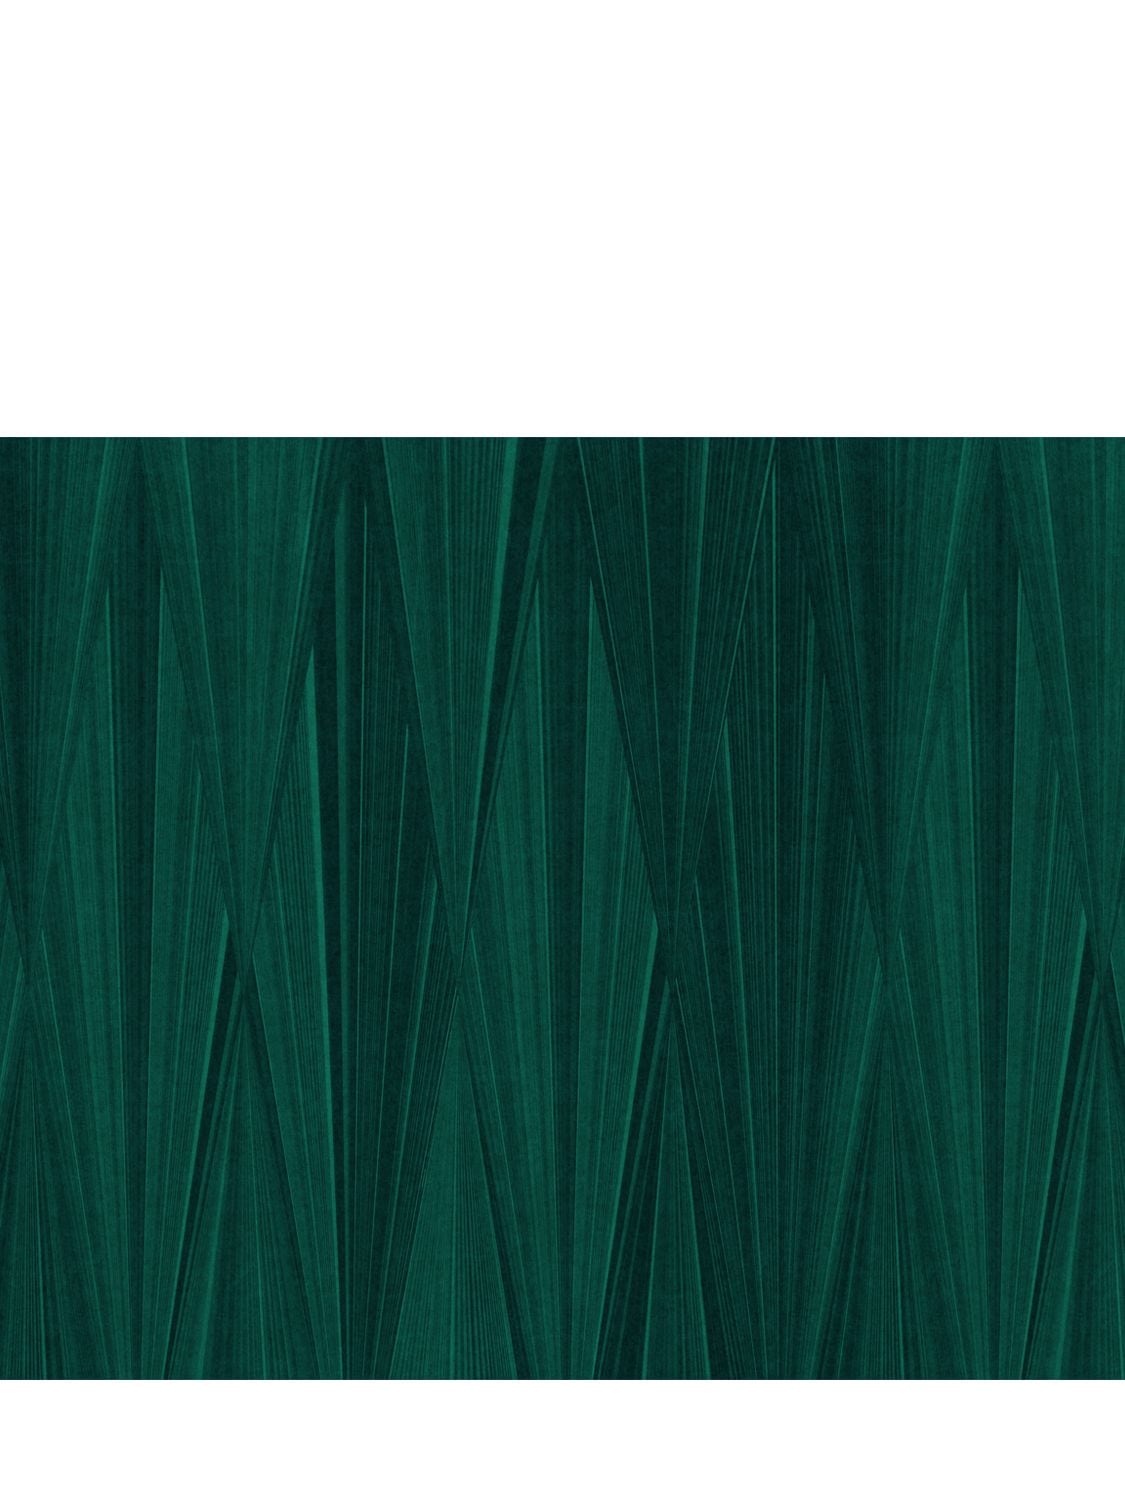 Londonart Assemblage Green Vinyl Wallpaper